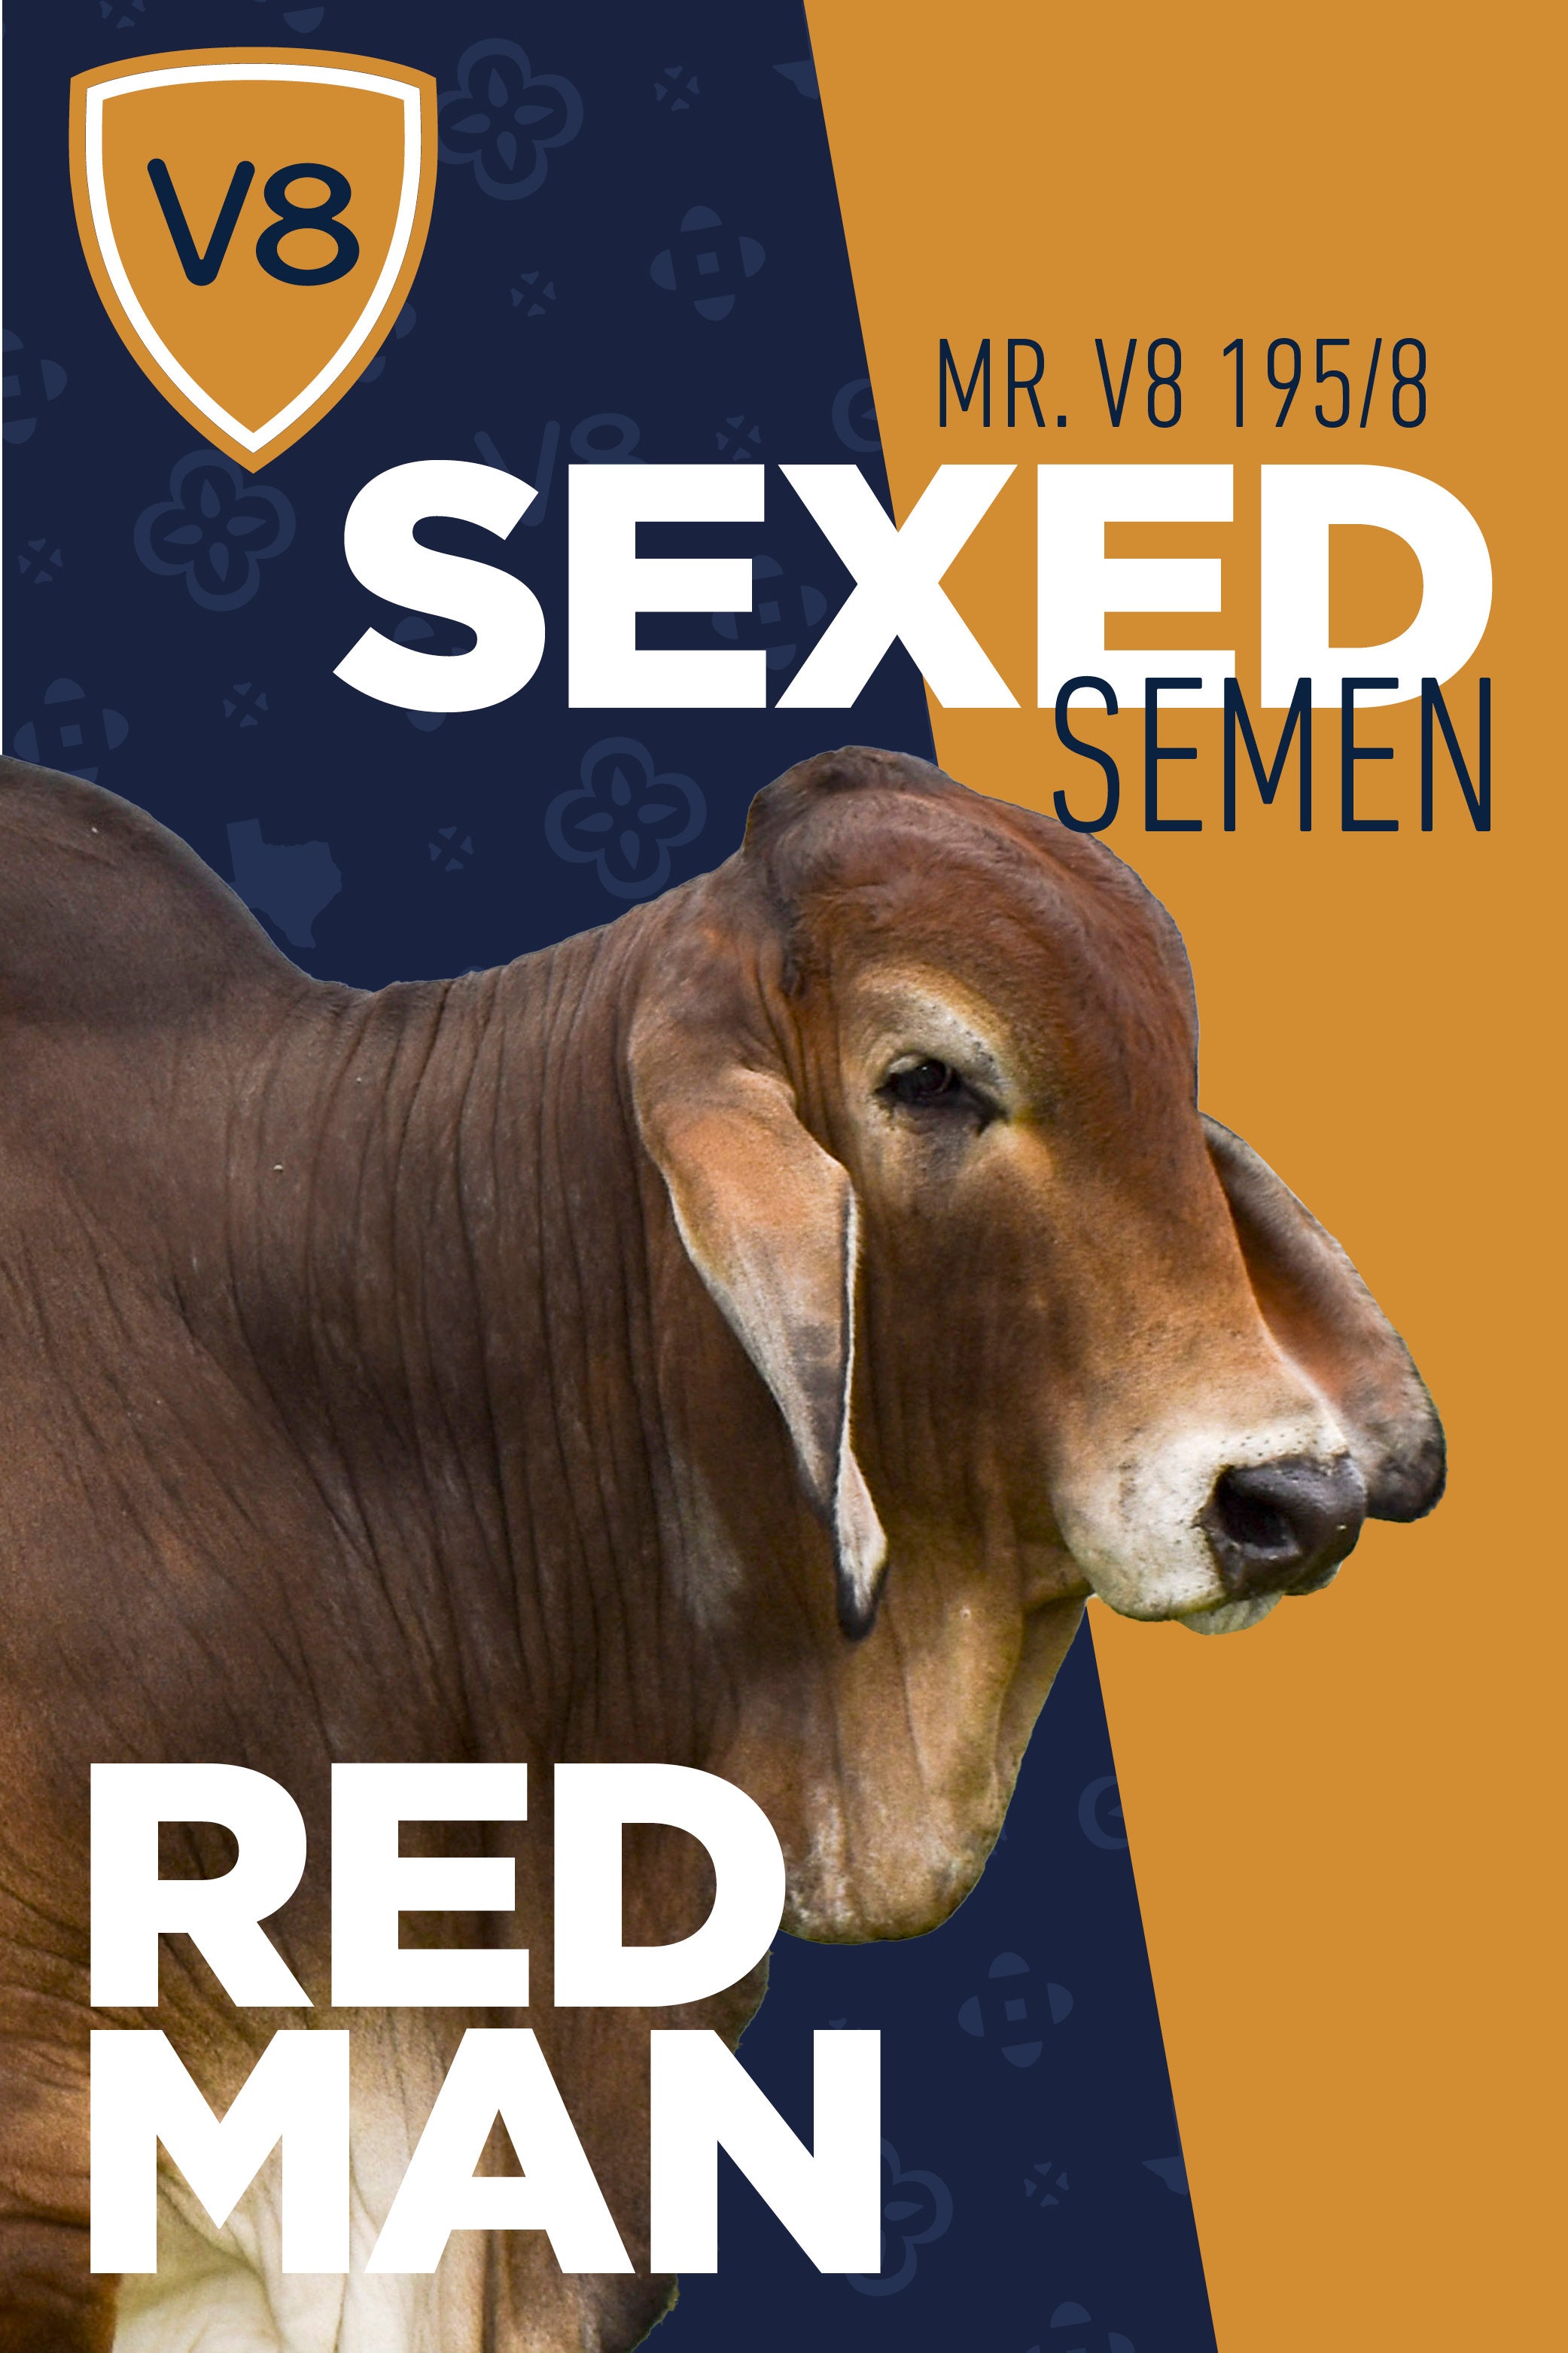 +Mr. V8 195/8 "Red Man" Sexed Semen - Package of 2 Units